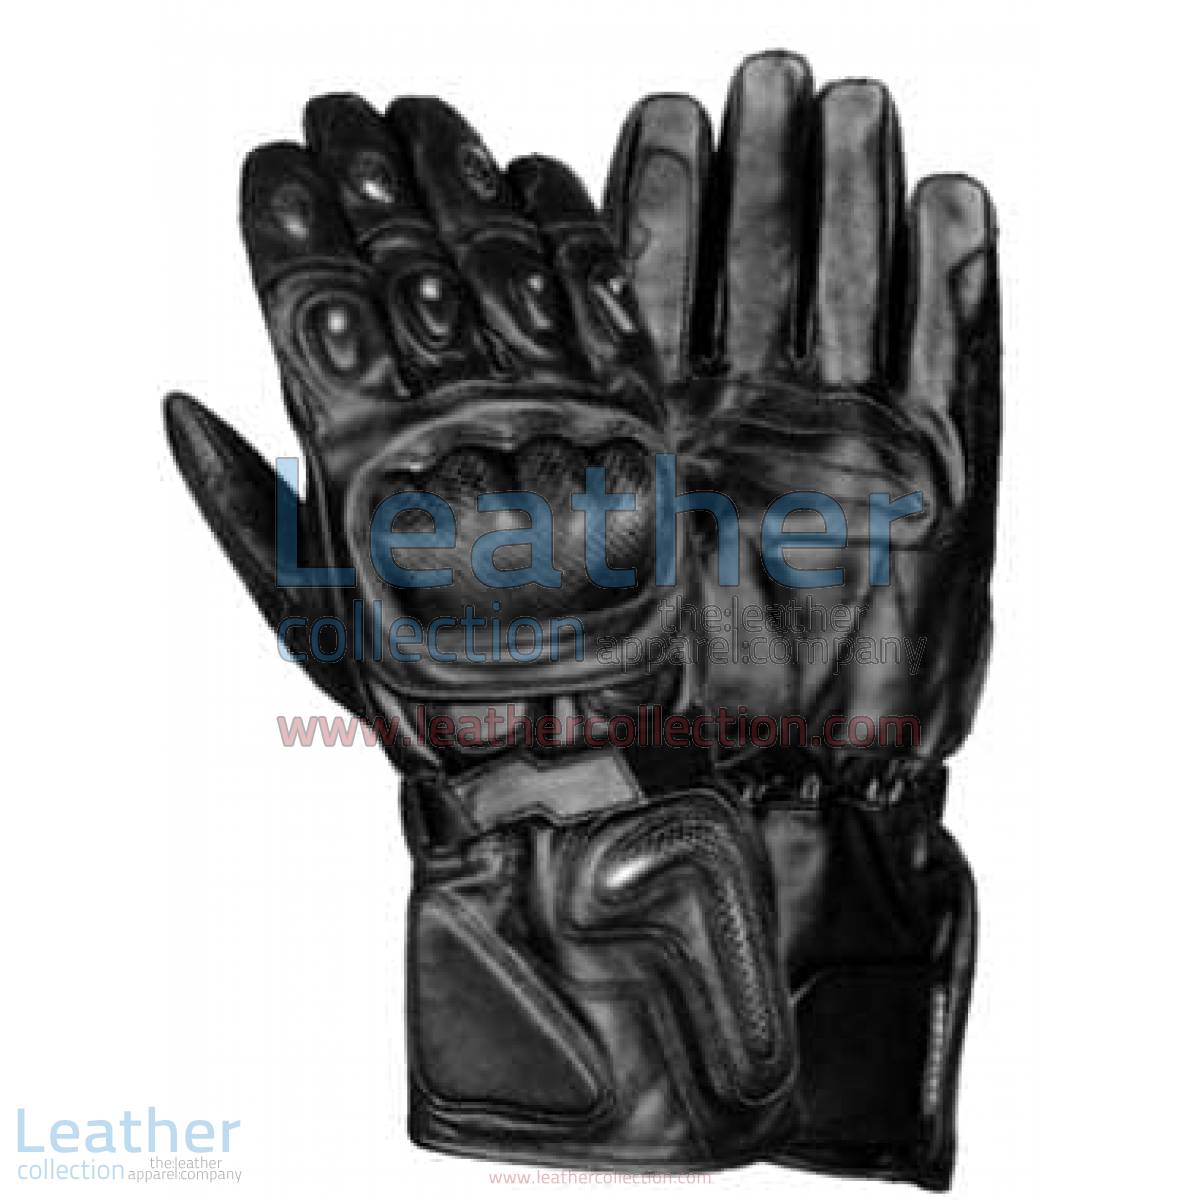 Silverstone Motorbike Riding Gloves | riding gloves,motorcycle riding gloves